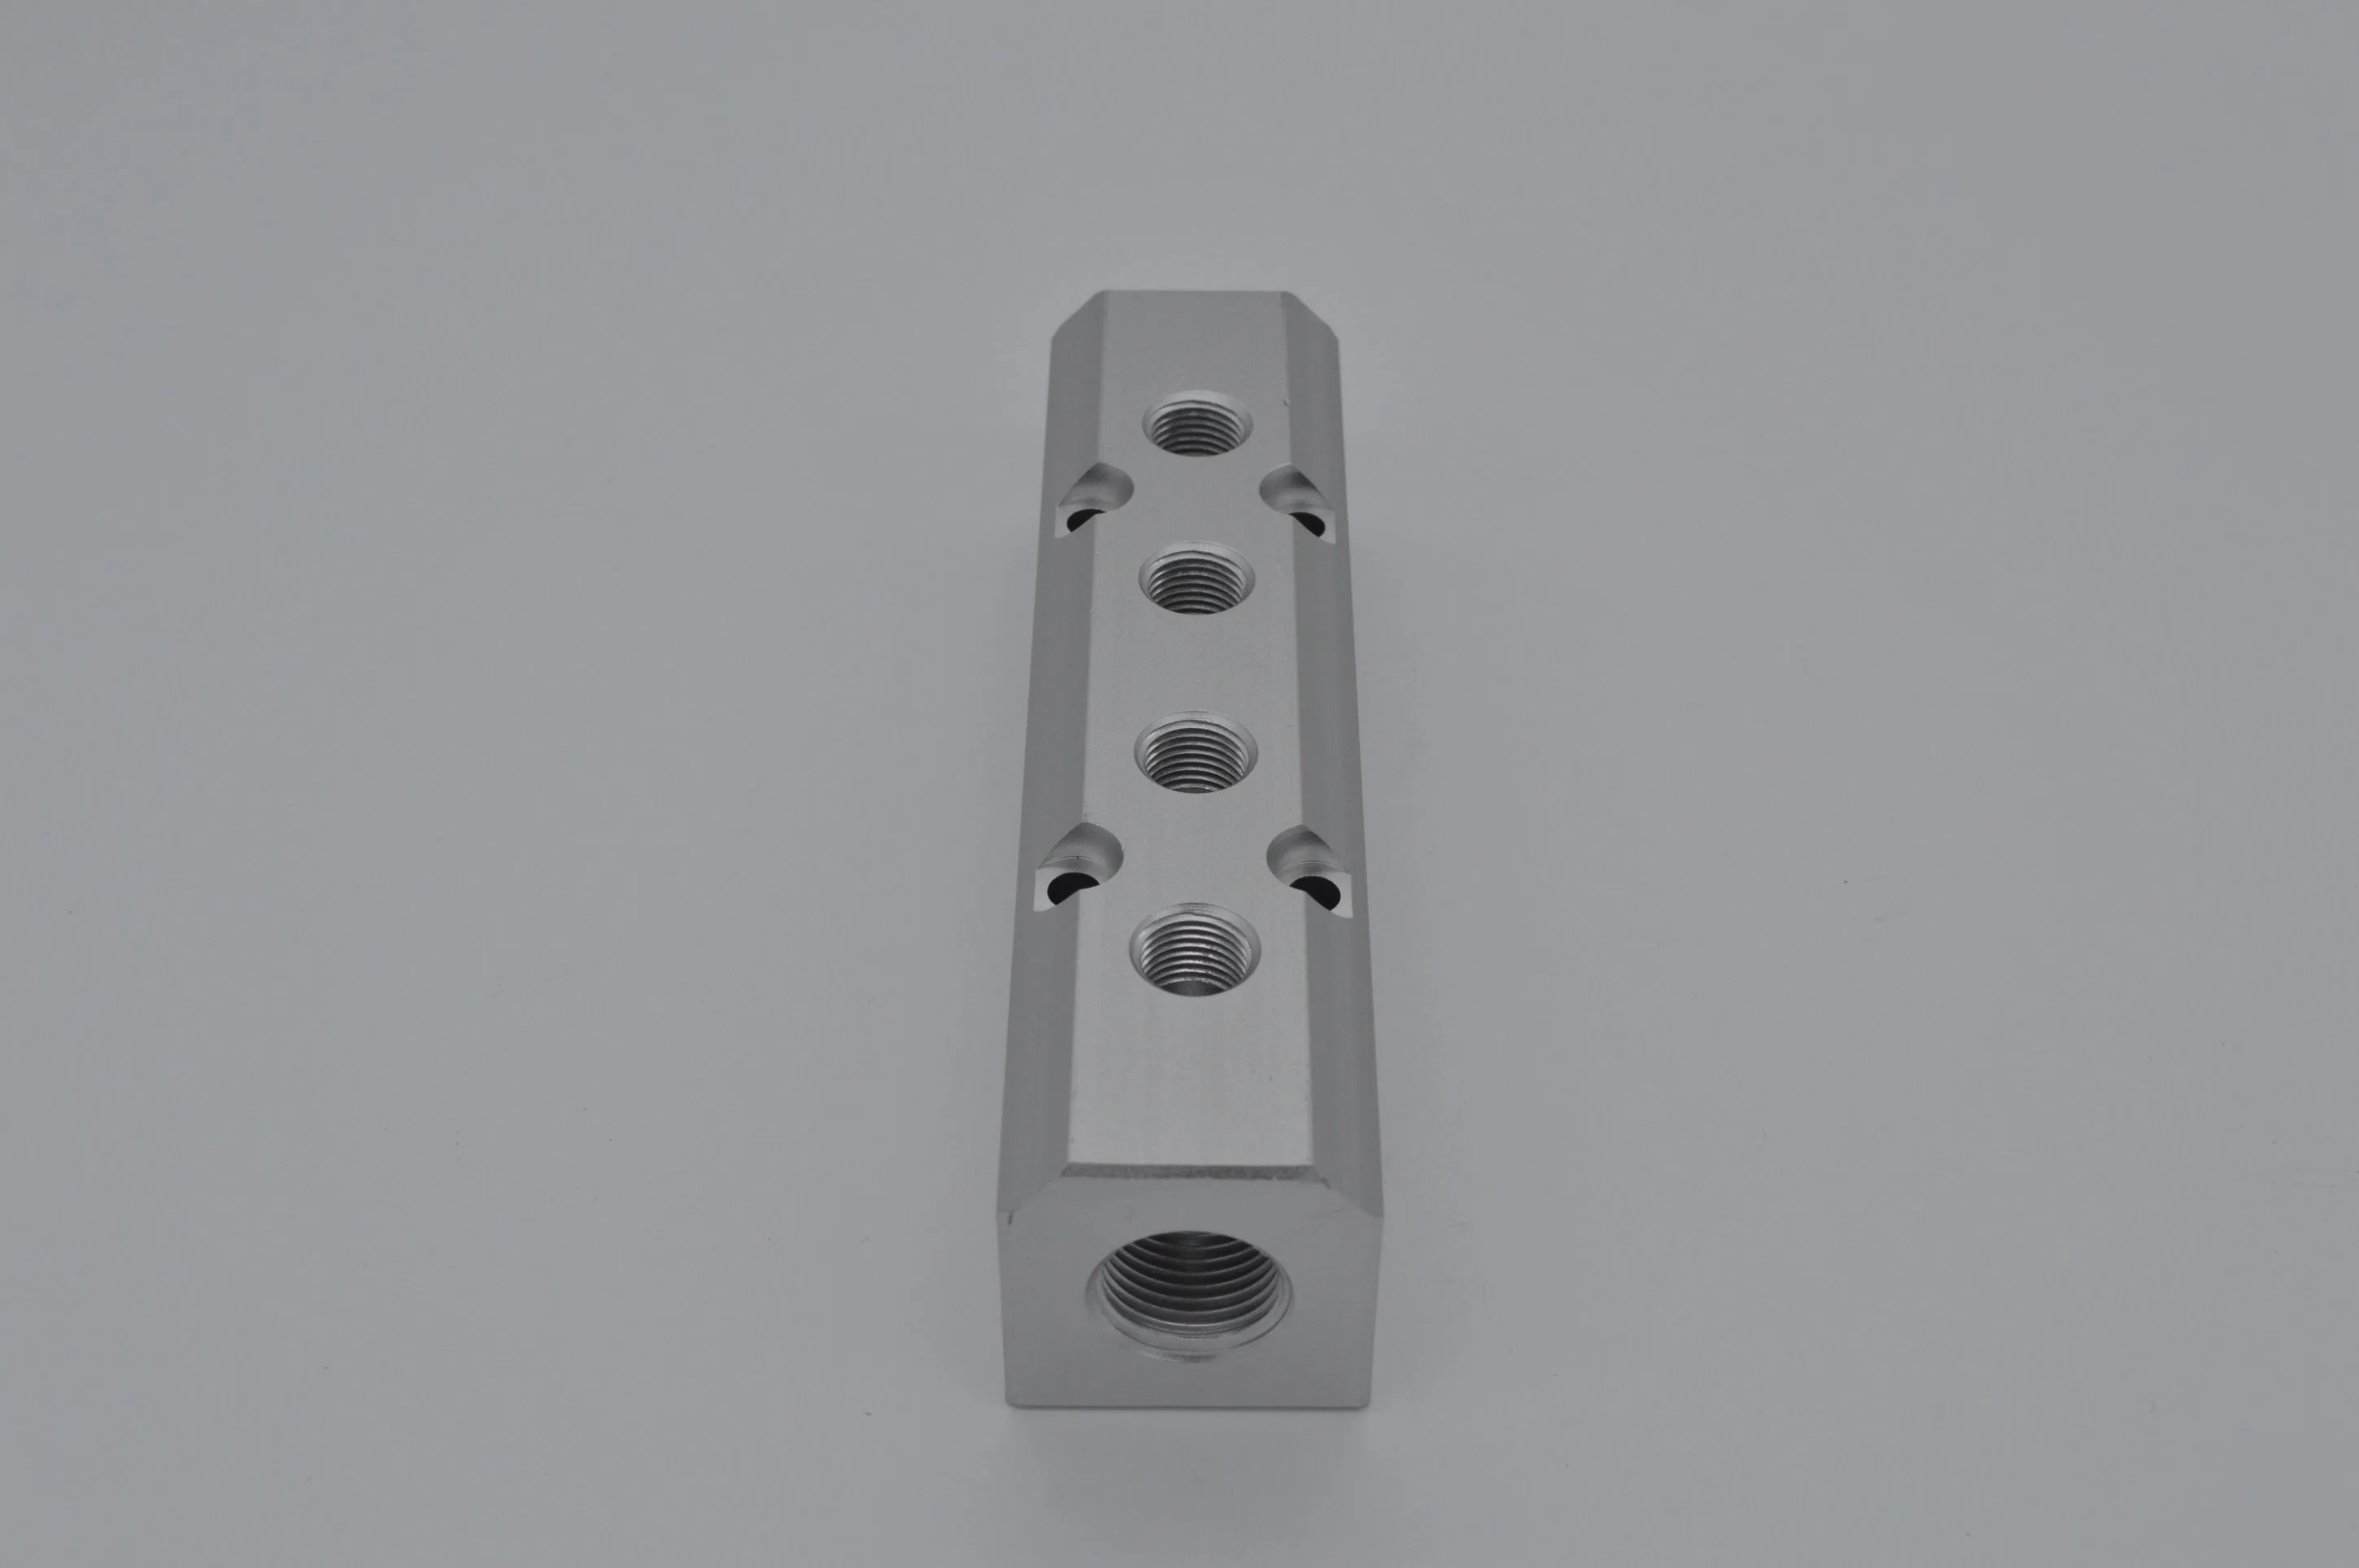 OEM/ODM Customized Pneumatic Air Pipe Hose Component Manifold Block Splitter